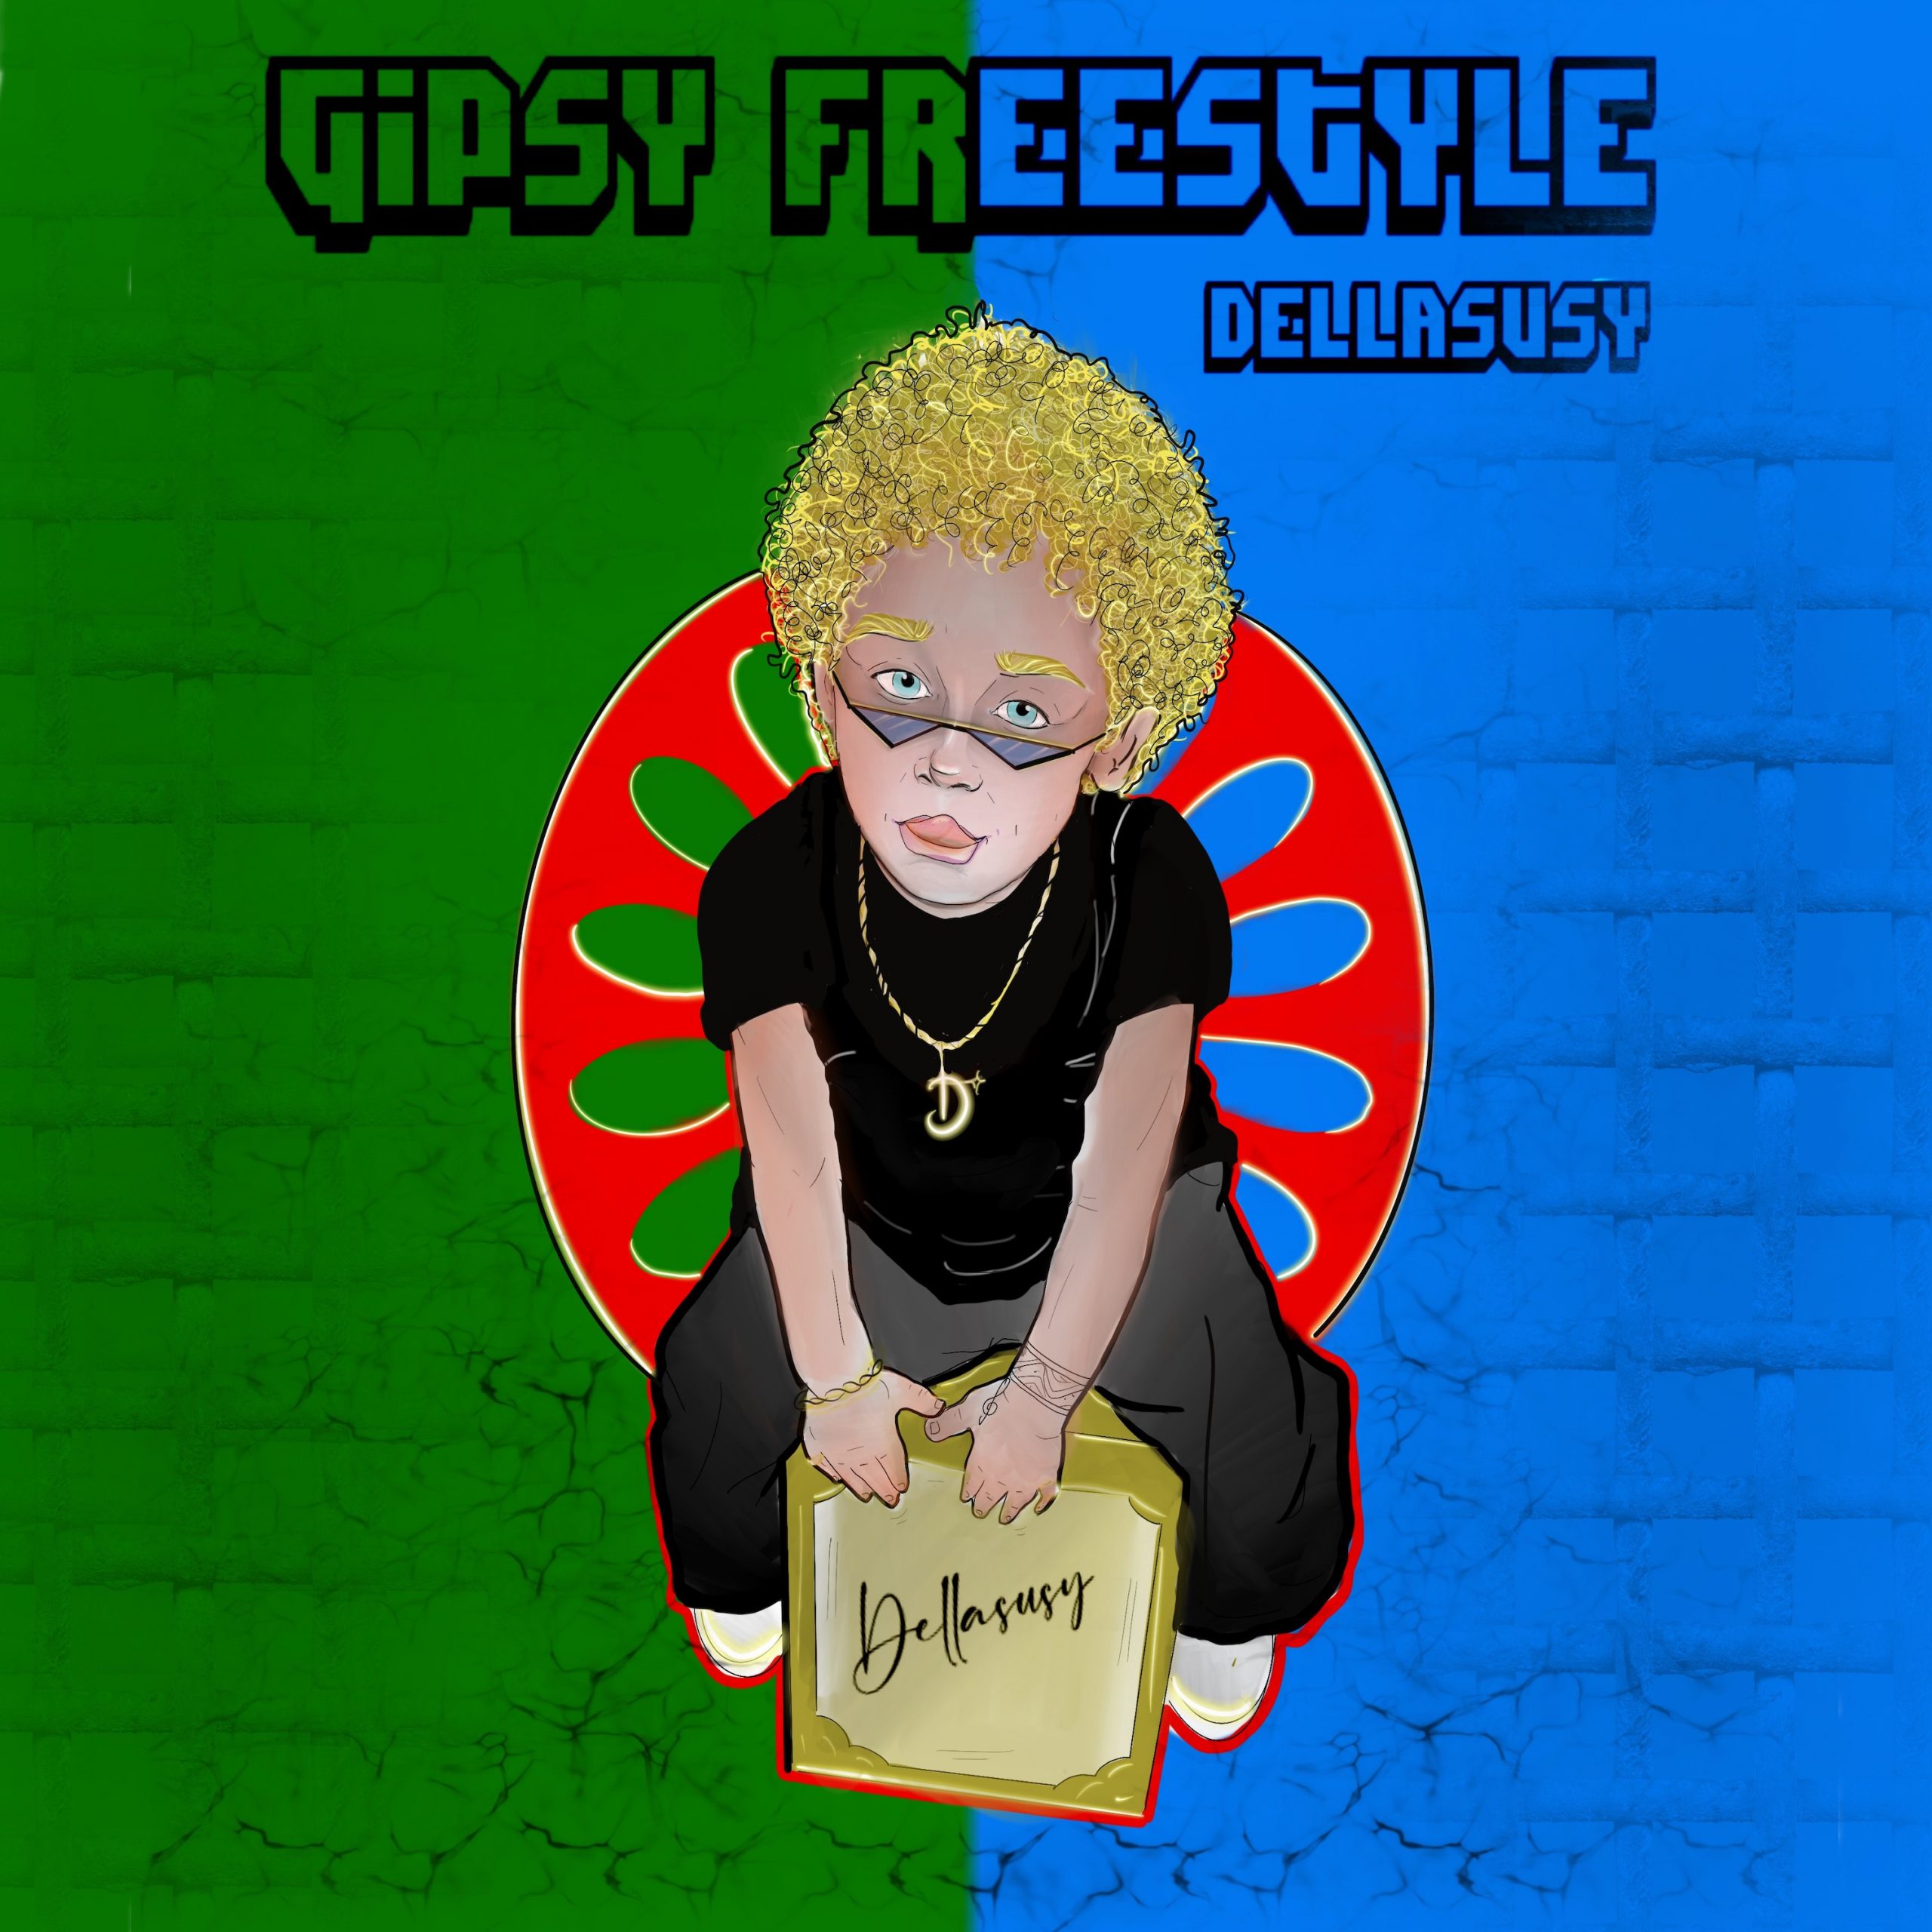 Dellasusy - Gipsy freestyle (Video)